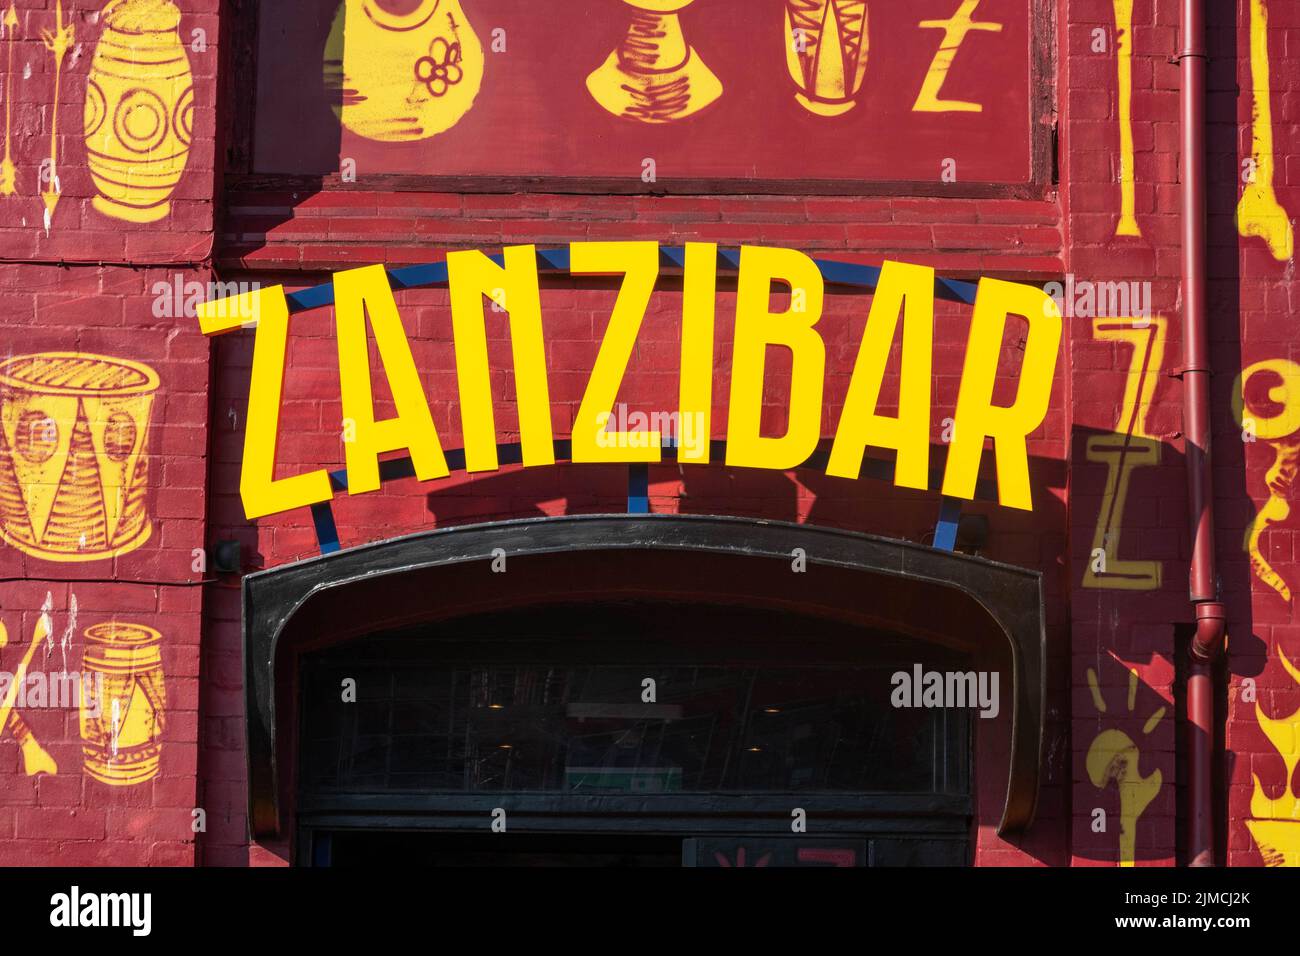 Zanzibar music club and bar in Liverpool Stock Photo